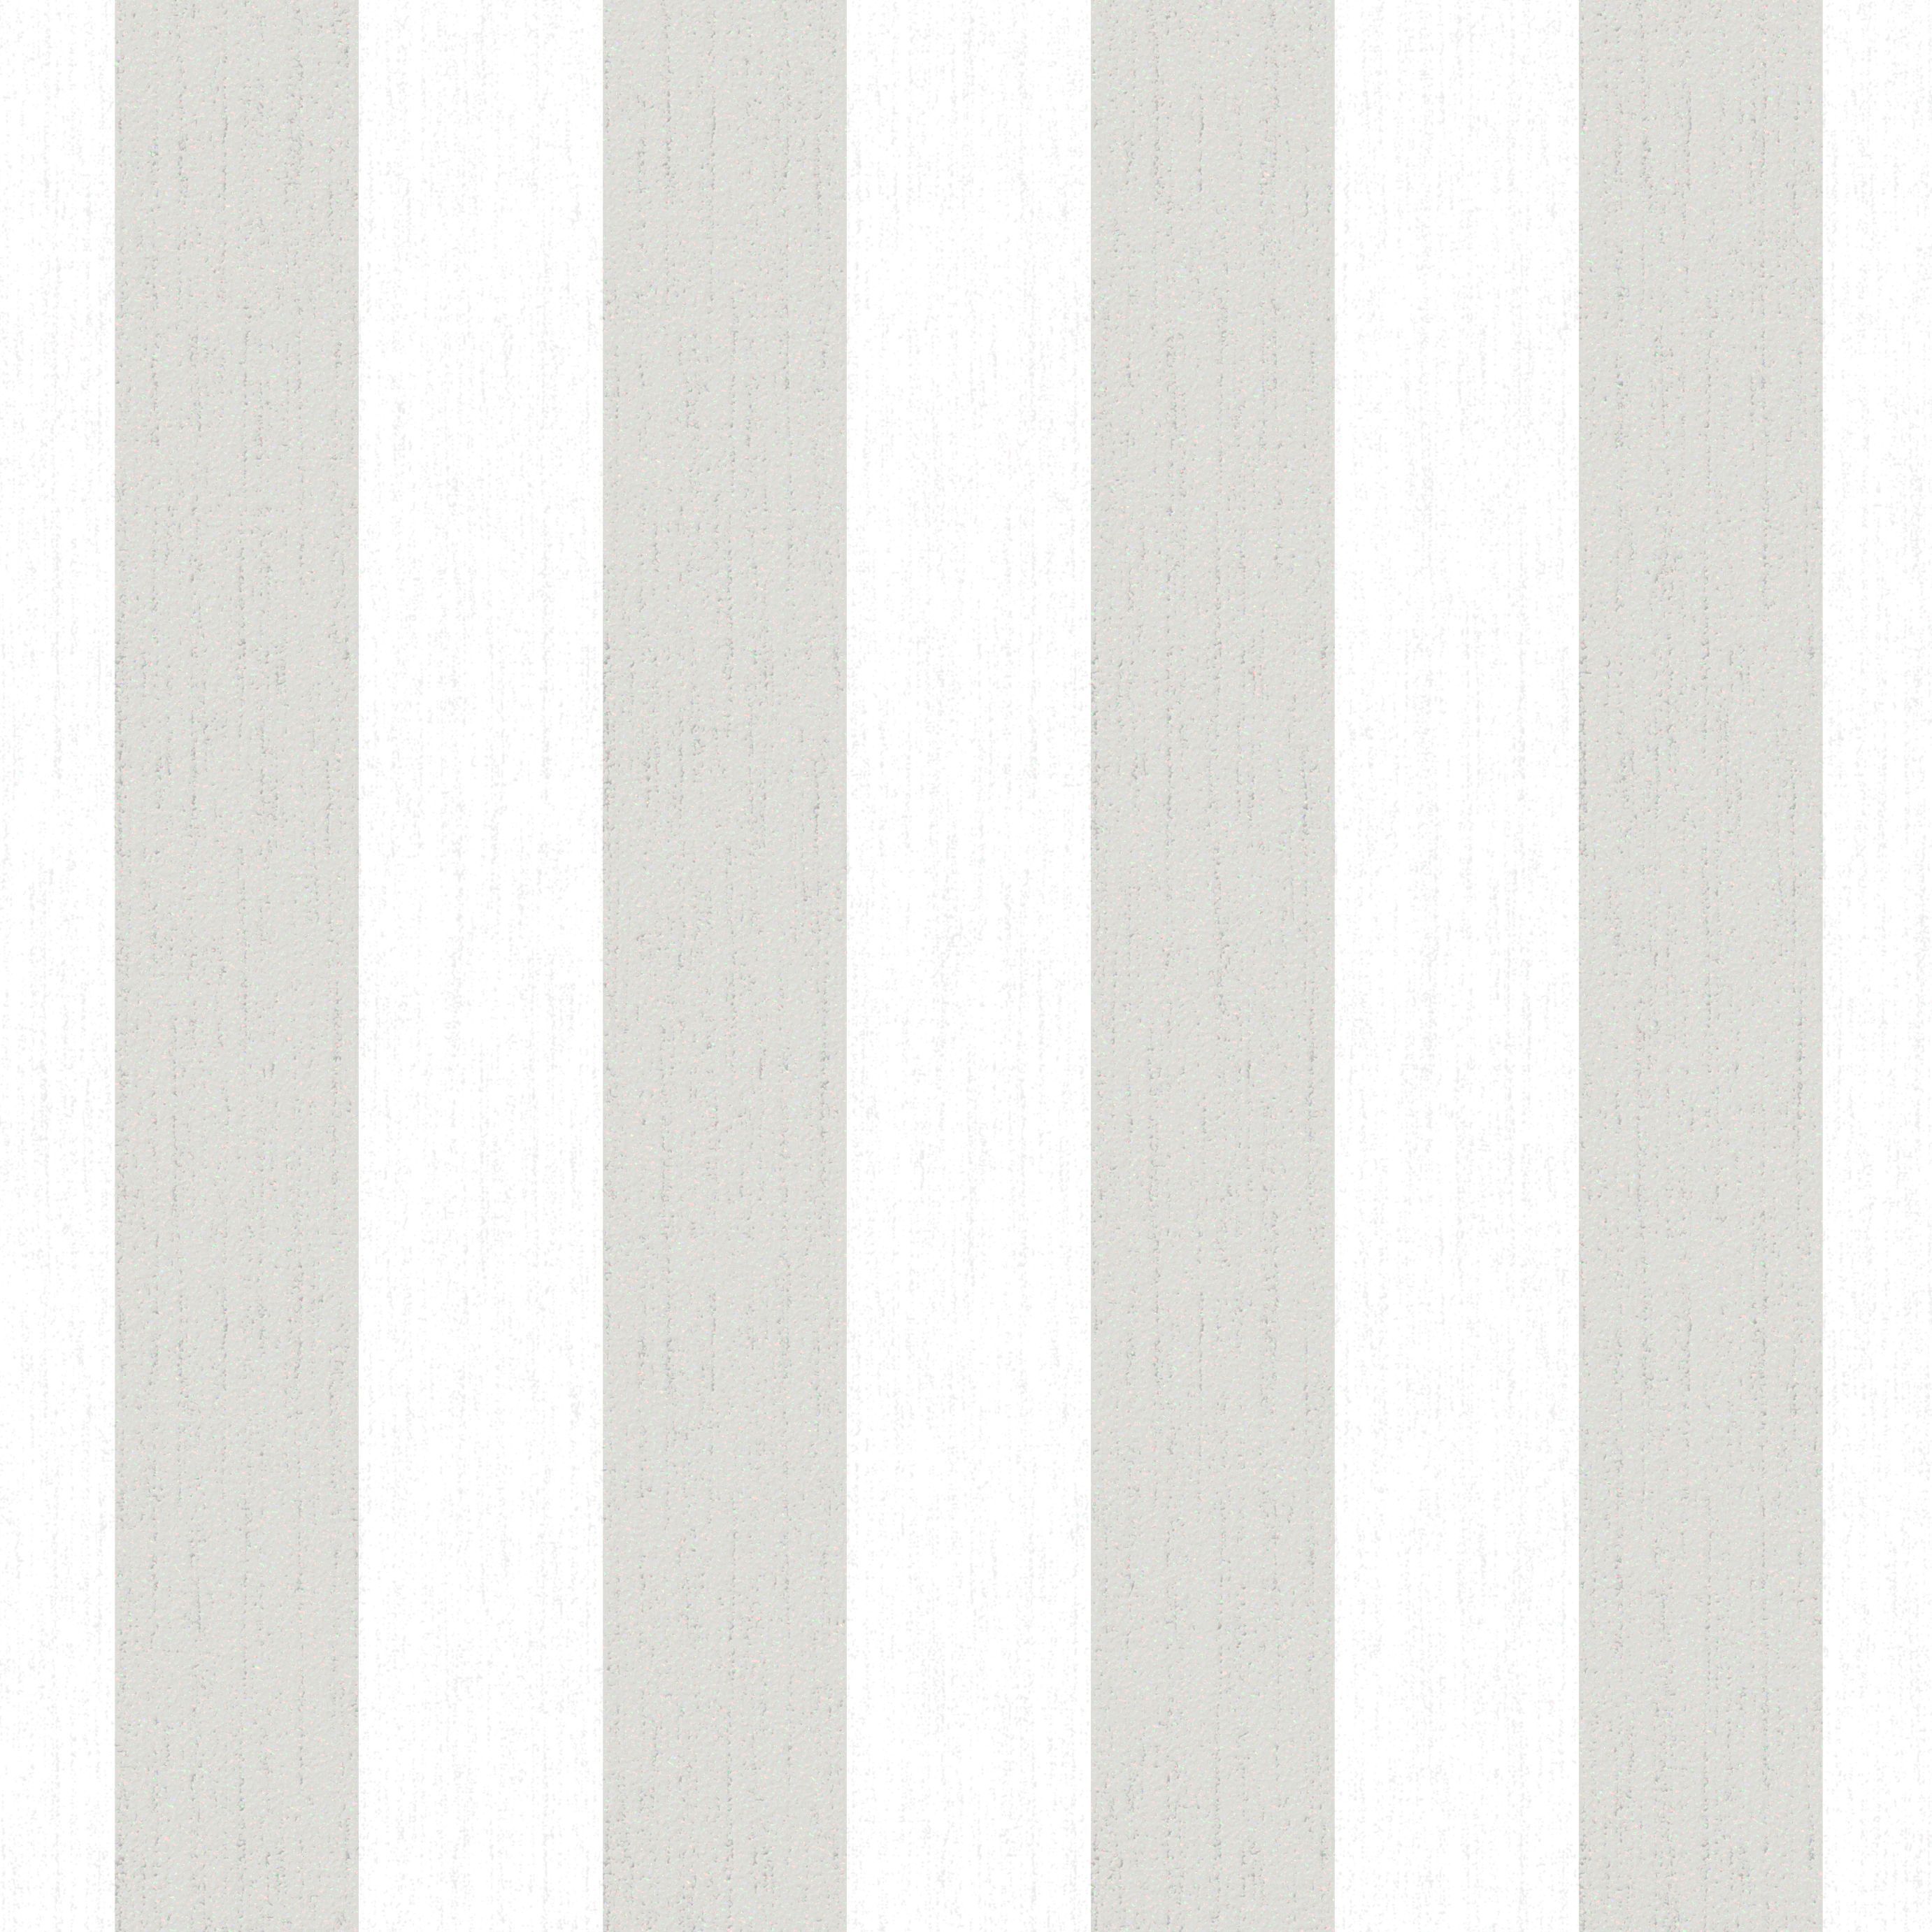 Julien MacDonald Glitterati White Silver glitter effect Striped Textured Wallpaper Sample